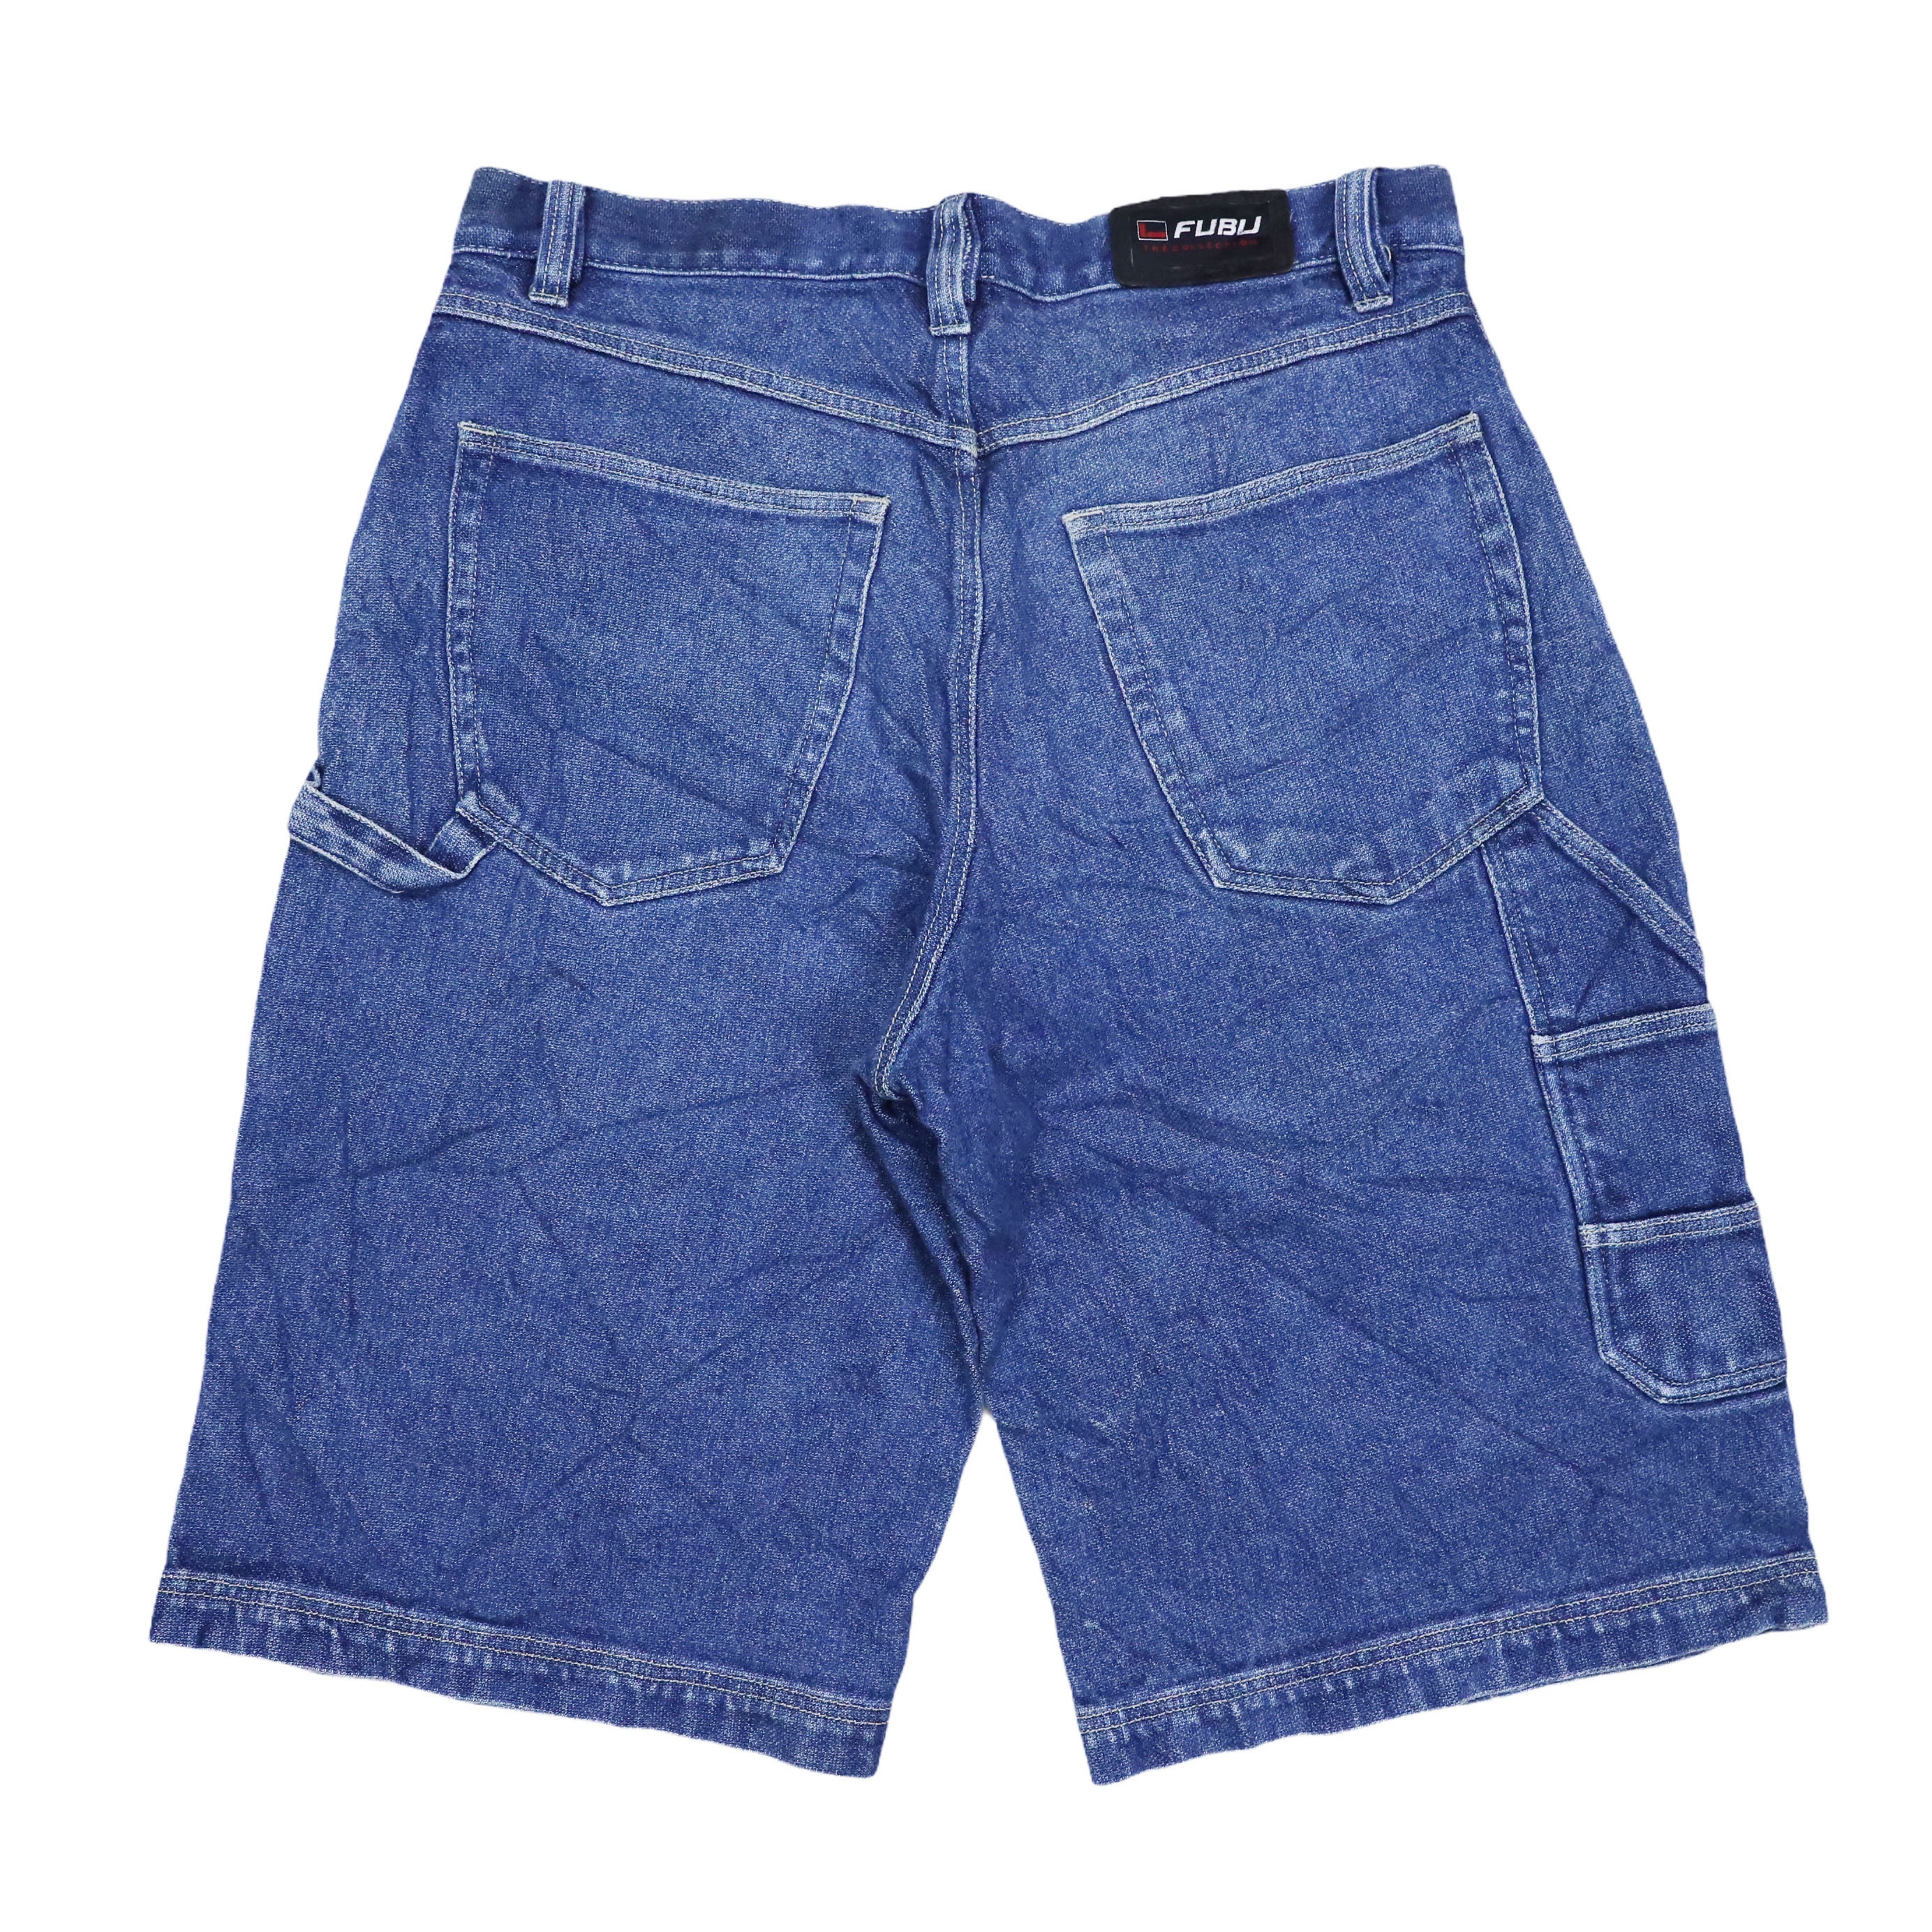 Vintage FUBU Jeans Shorts Size W 36 jnco style 90s Hip | Etsy